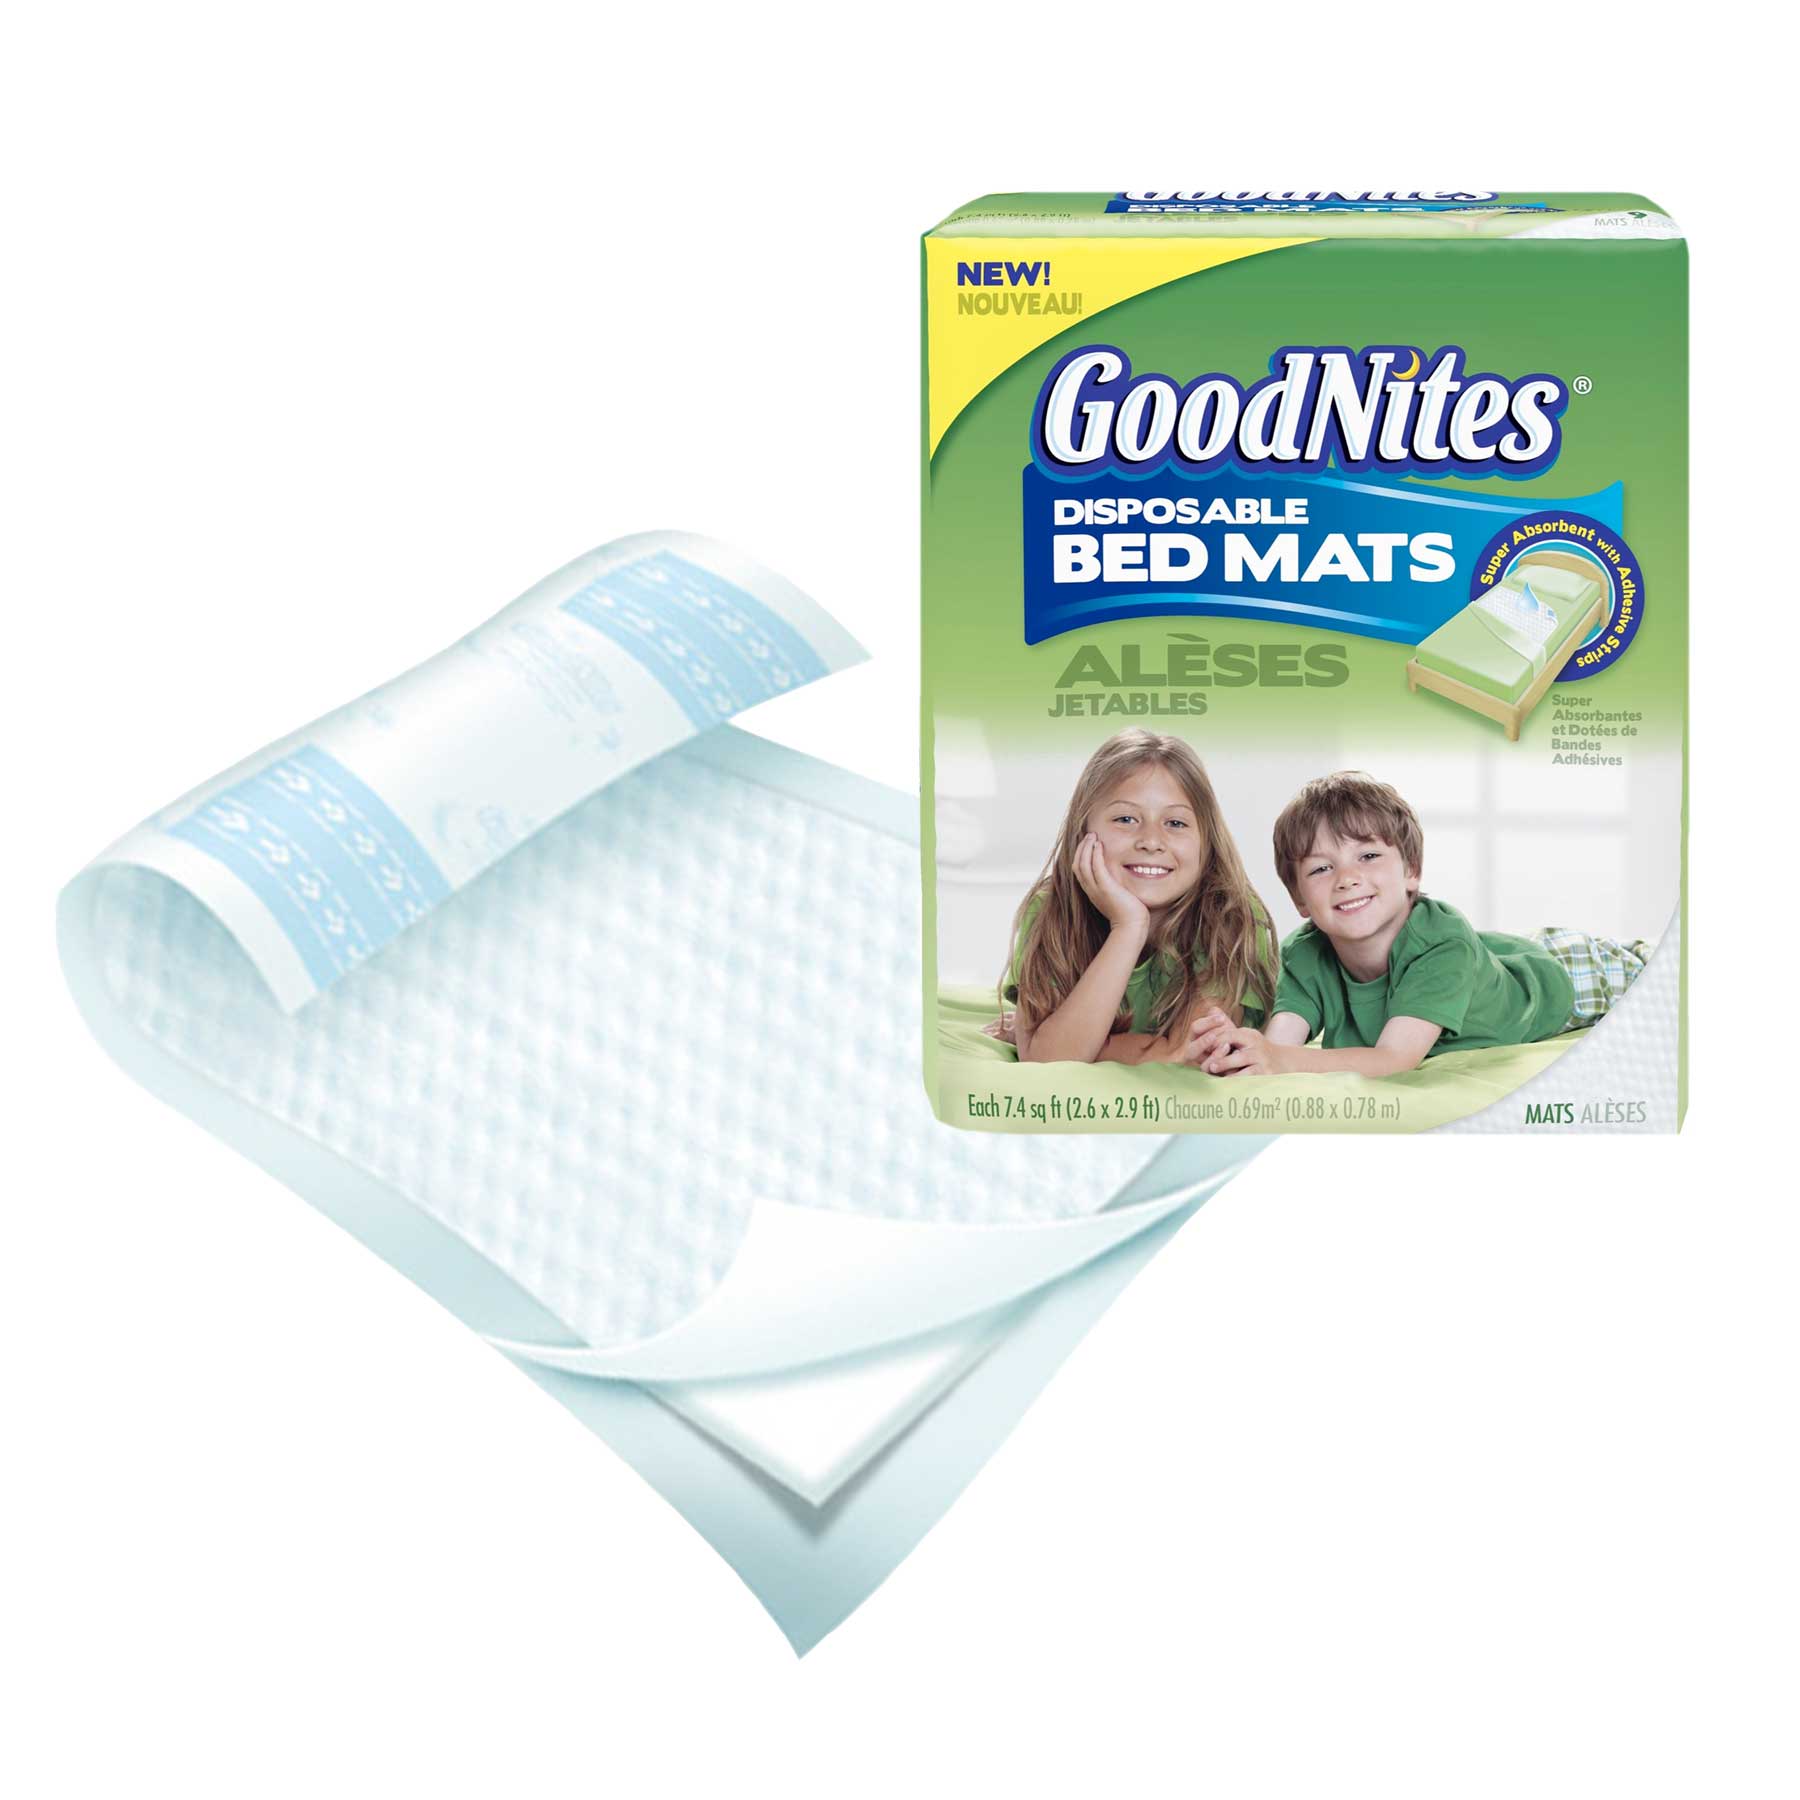 Goodnites Bed Mats, Disposable - 9 mats